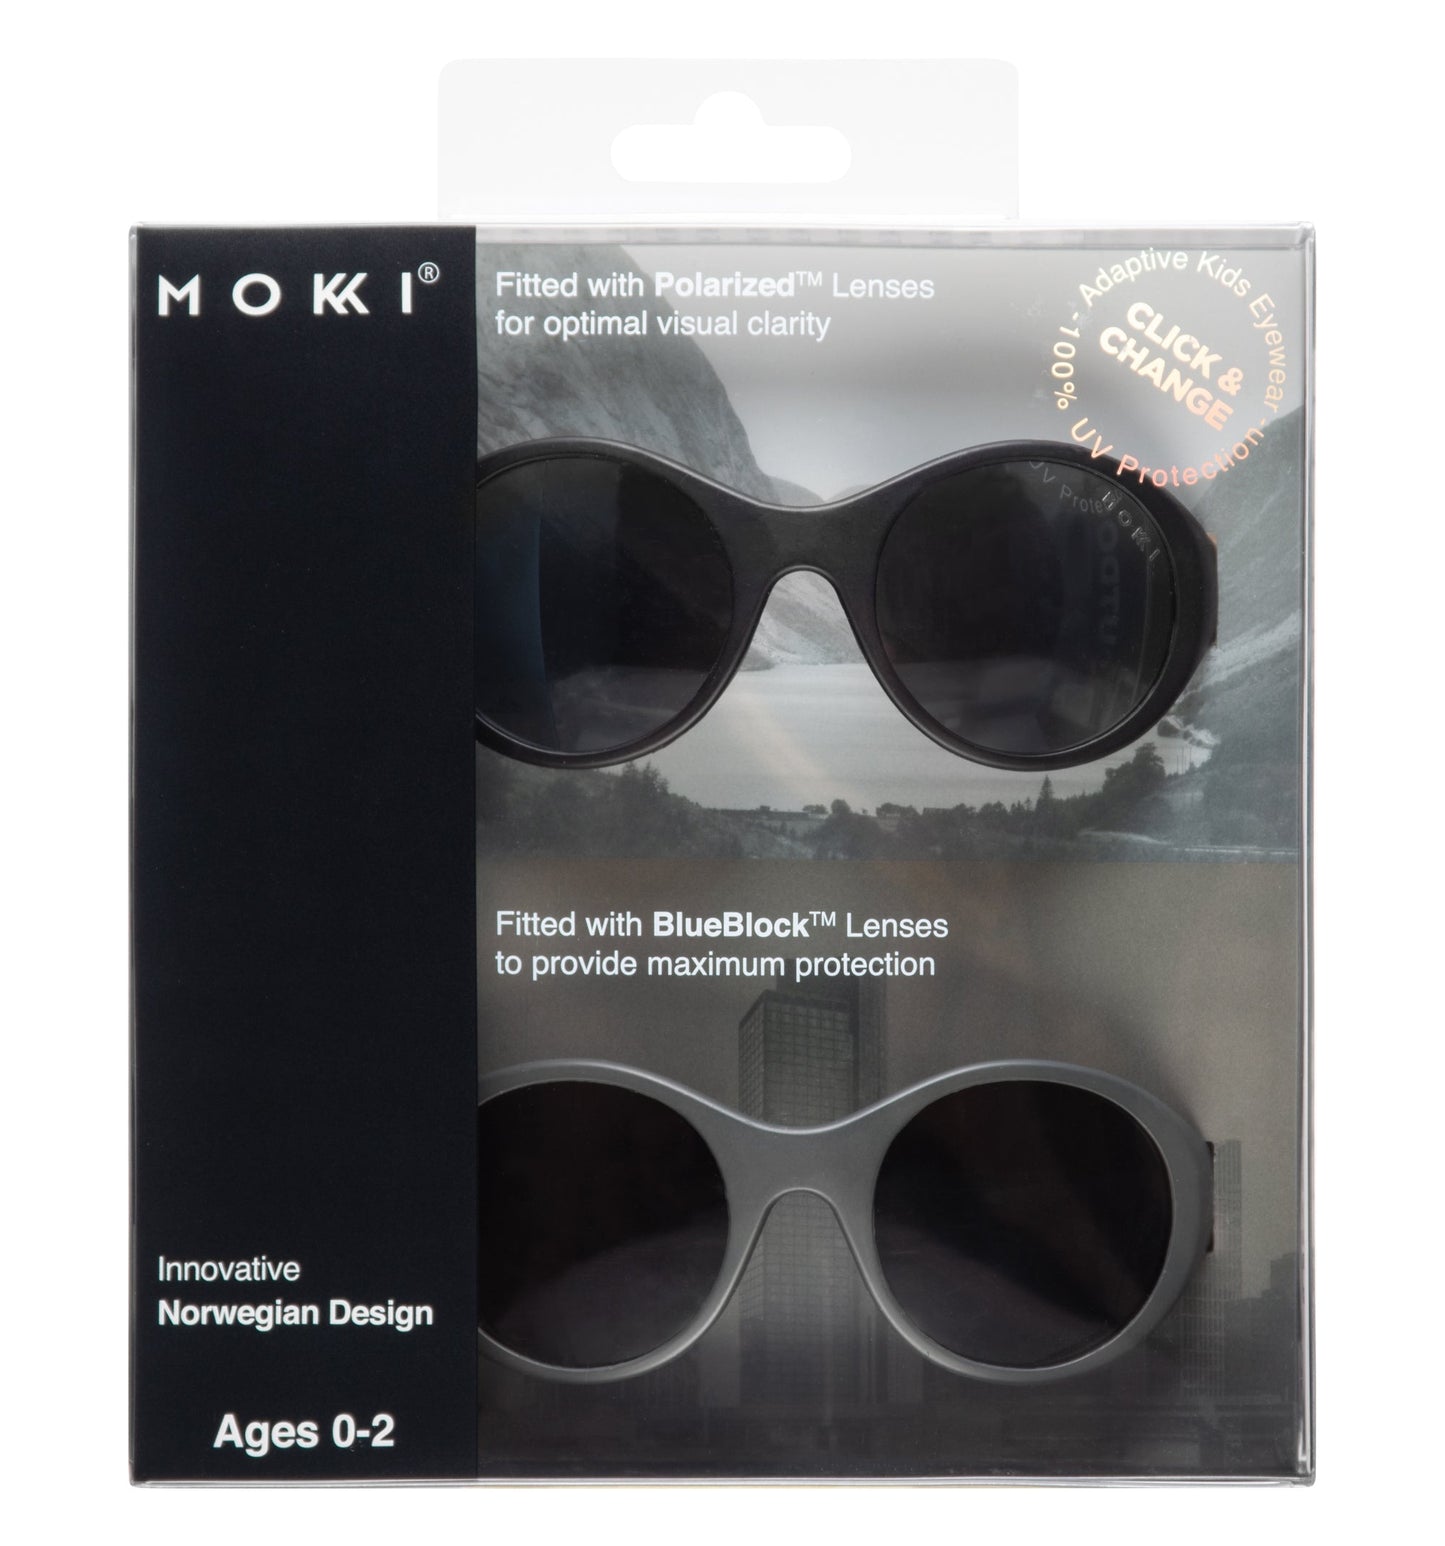 Mokki Click & Change-sunglasses for kids ages 0-2 in black